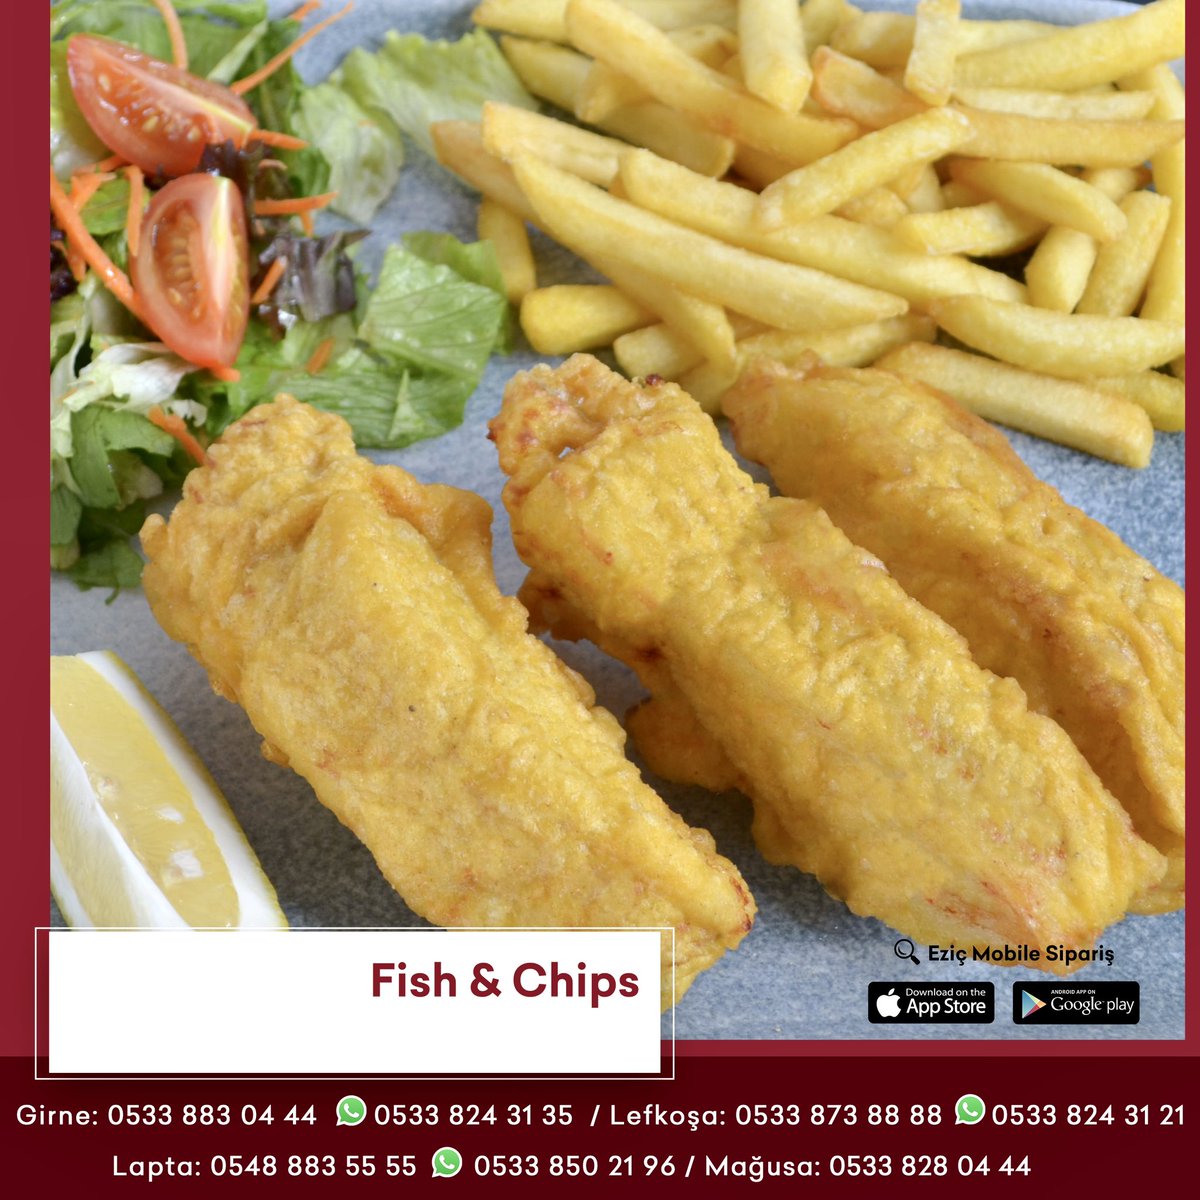 😍 #fishchips #food #eziçrestaurant #cyprus #foodlover #fish